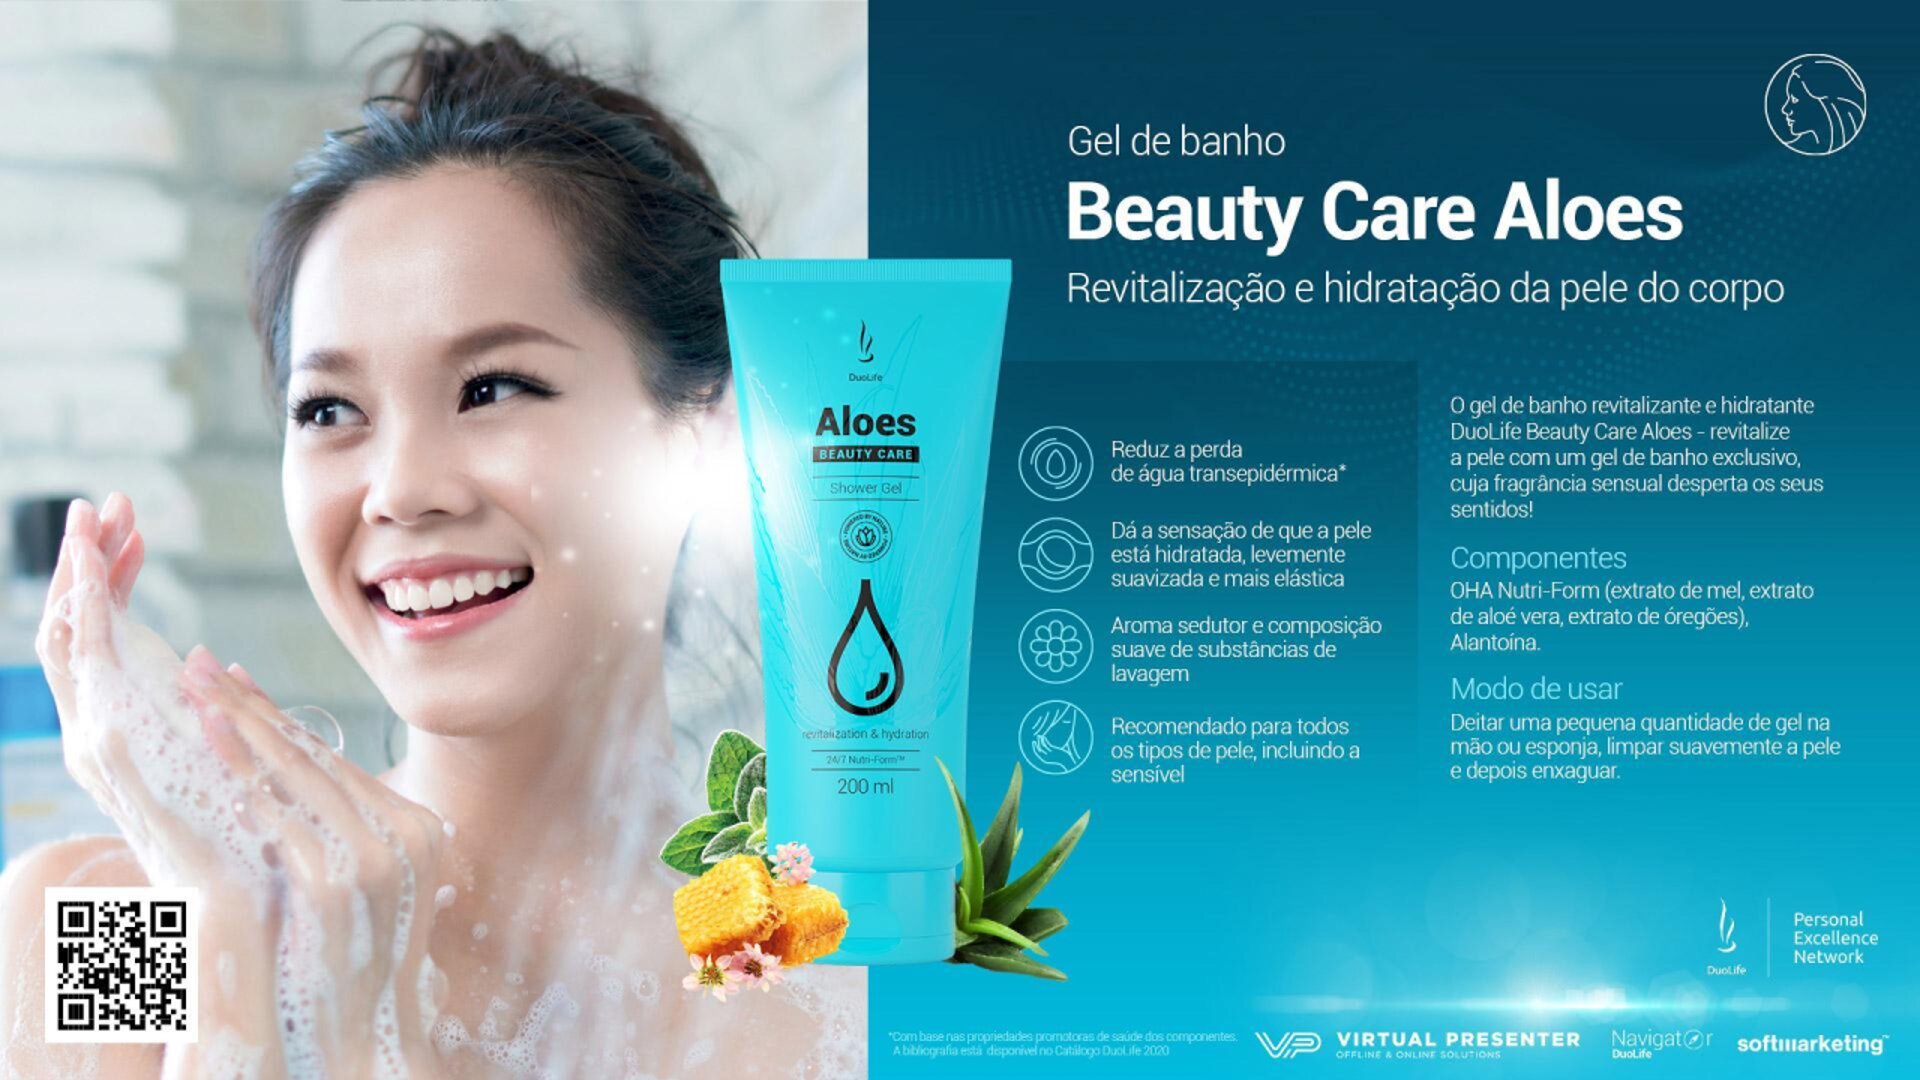 Beauty Care Aloes - Gel de Banho